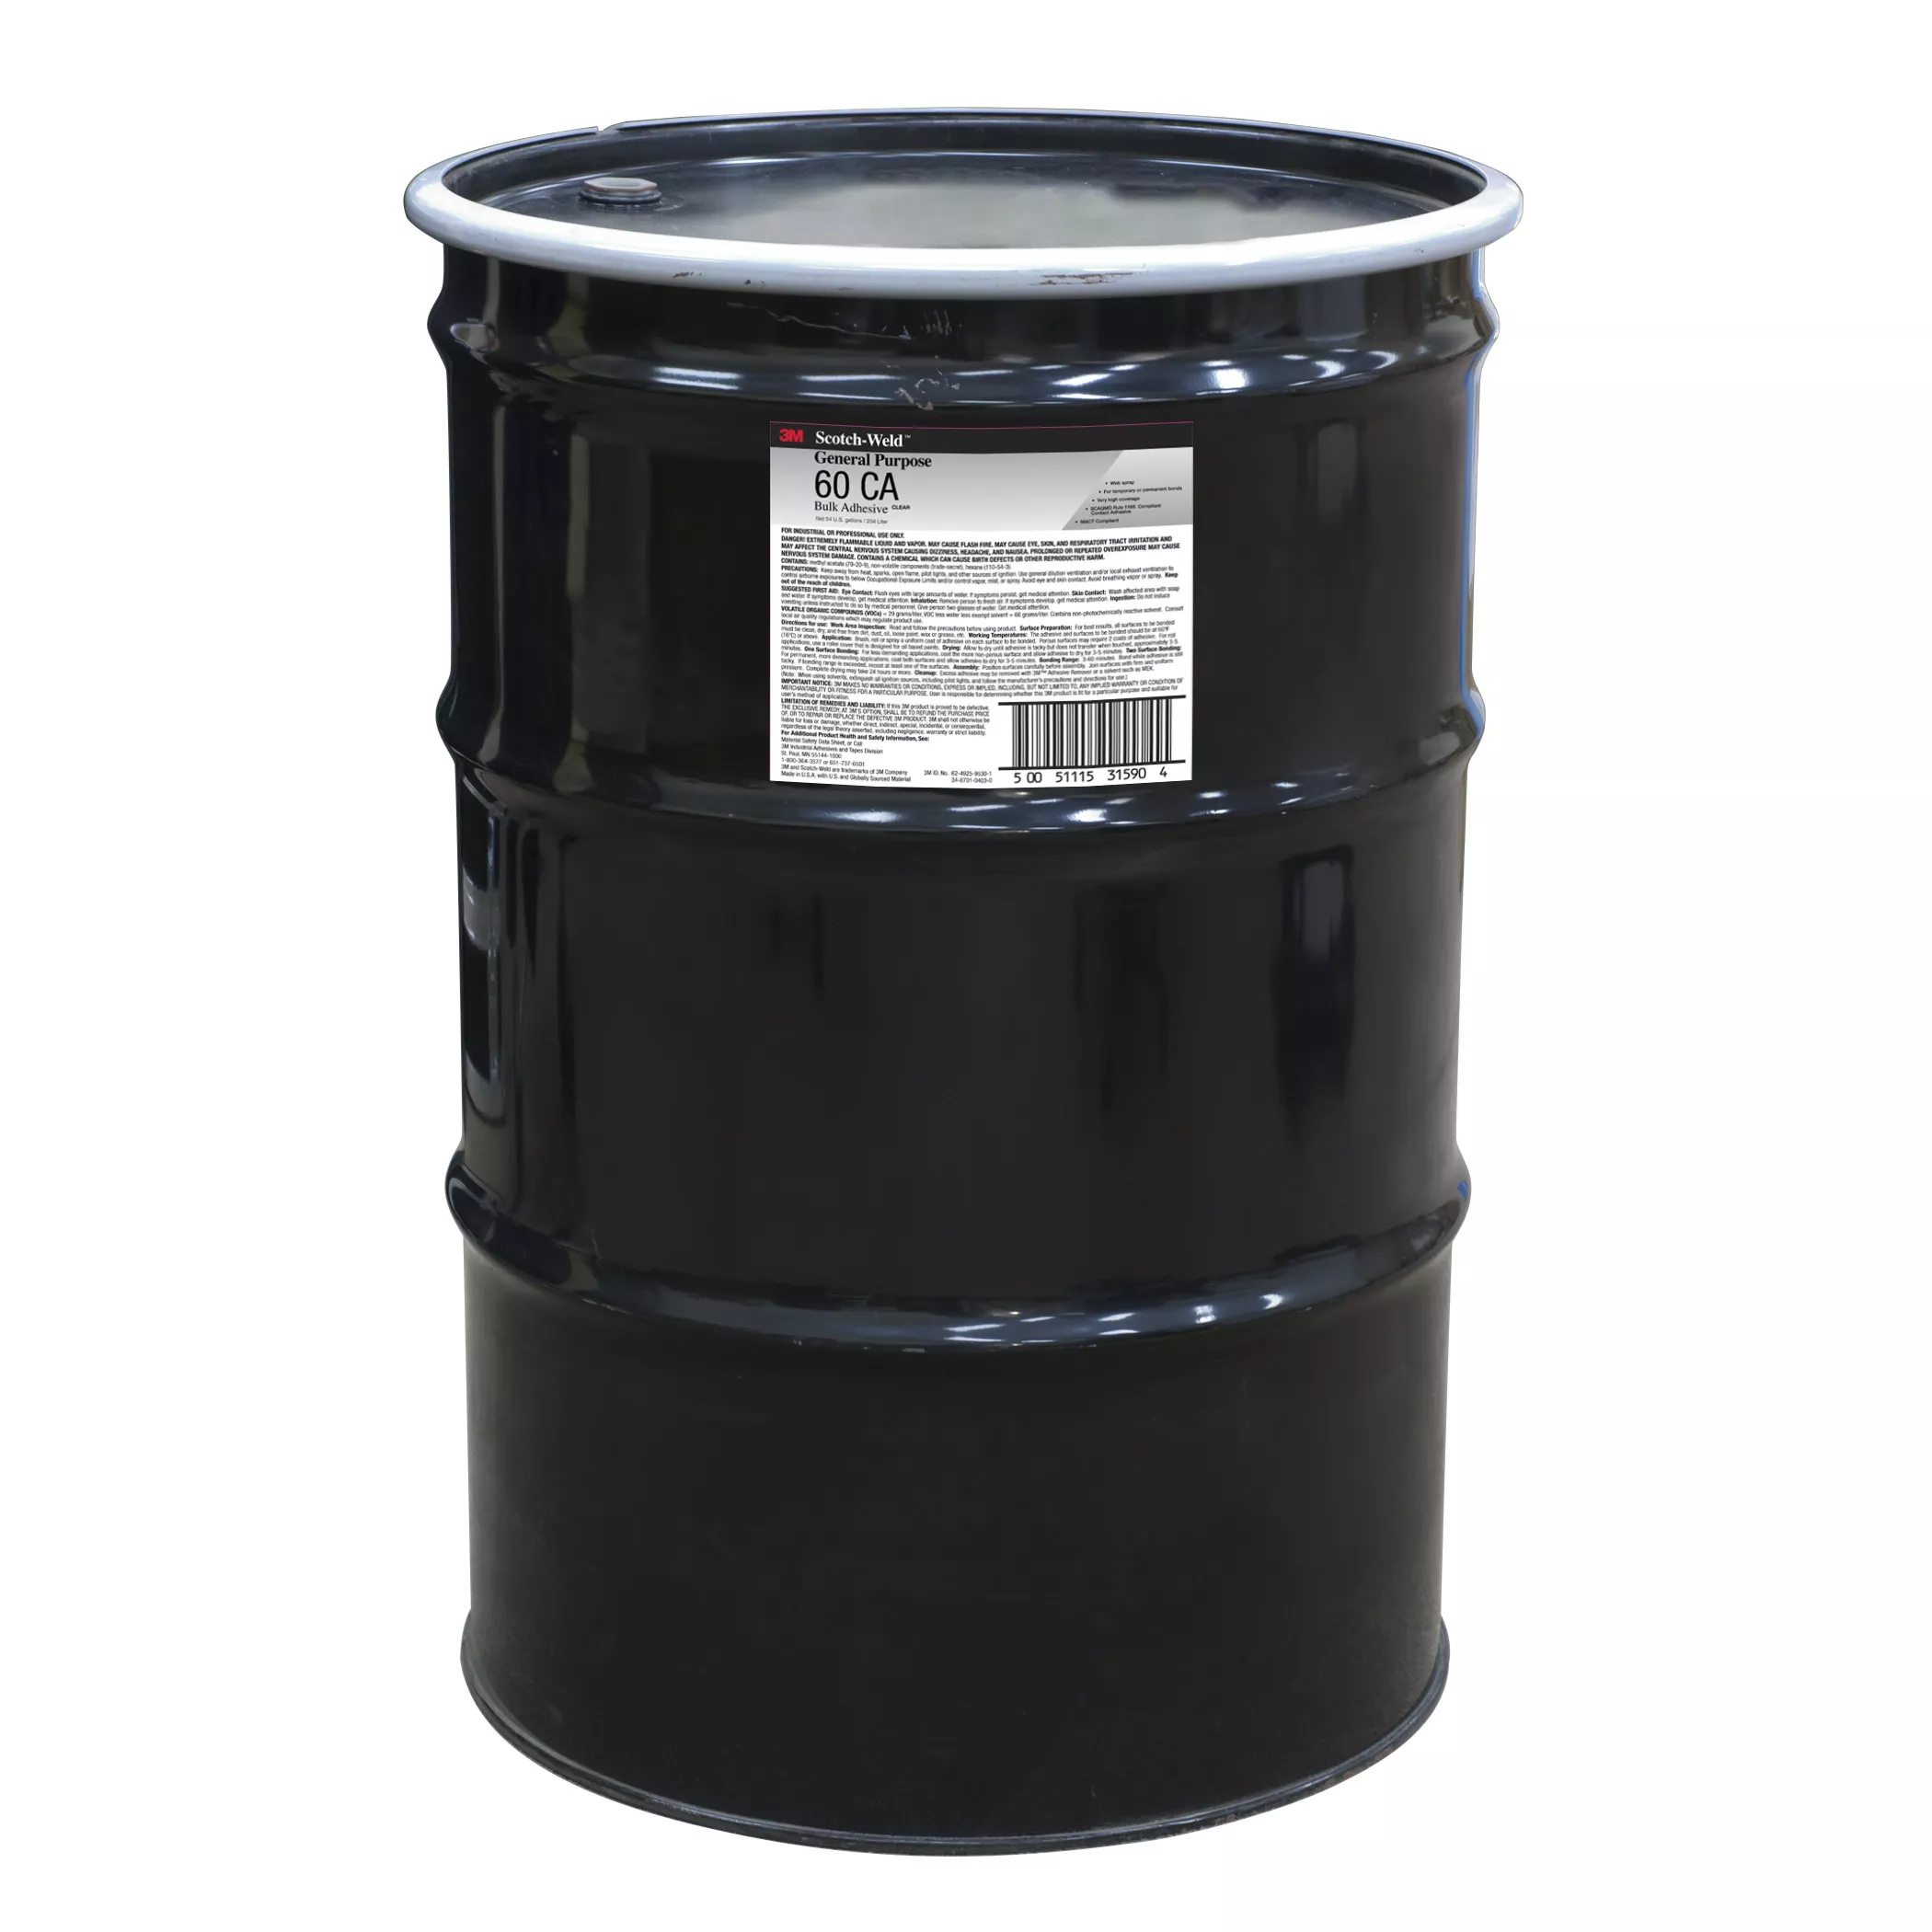 3M™ General Purpose 60 CA Adhesive, Clear, 55 Gallon (54 Gallon Net),
Drum